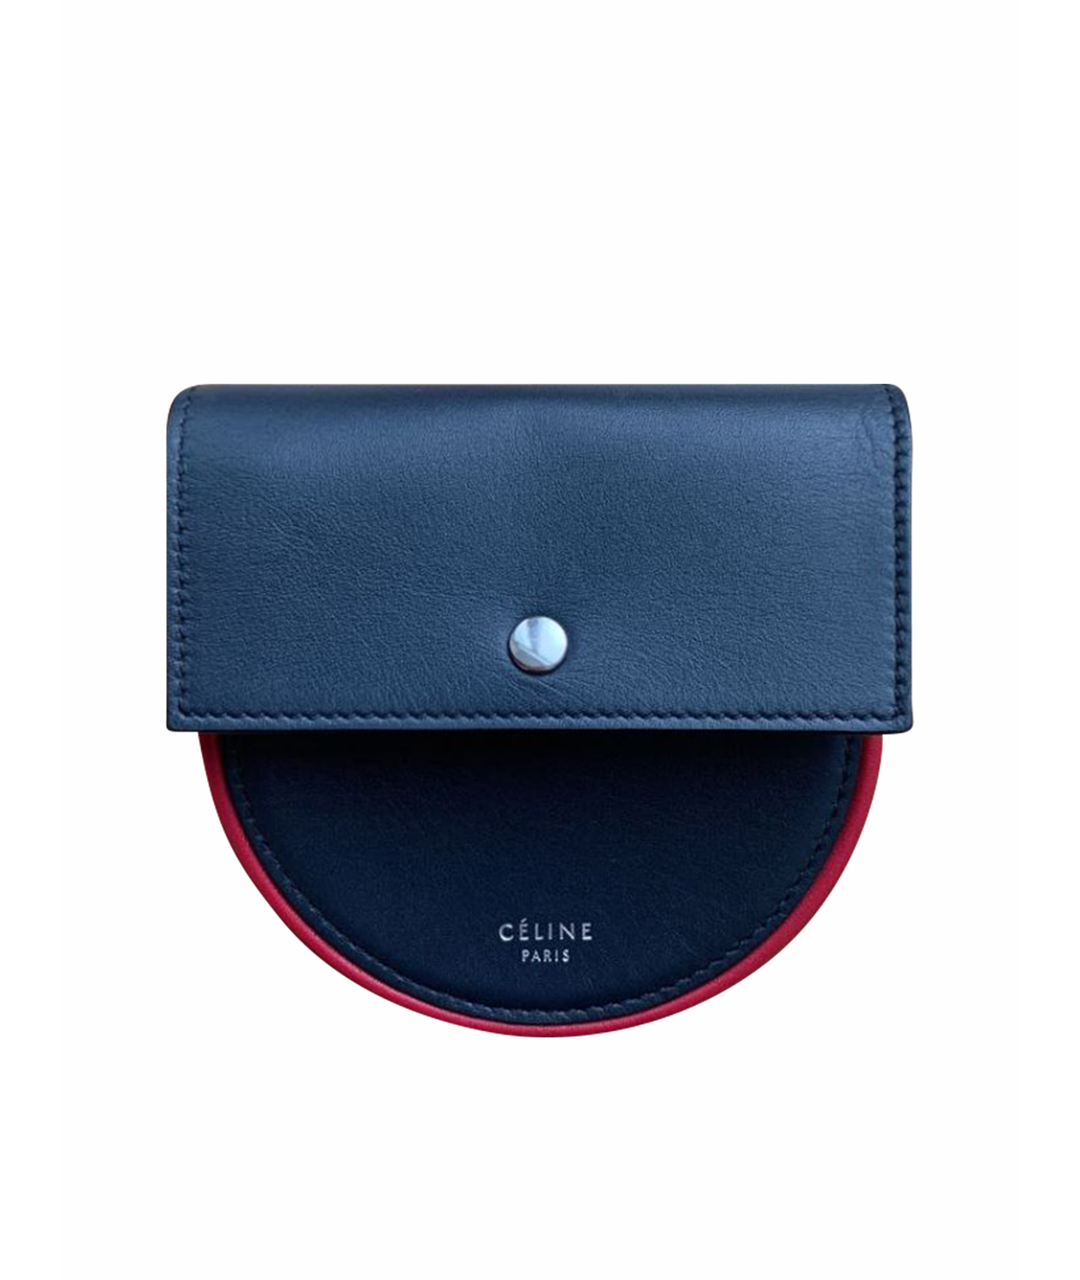 CELINE PRE-OWNED Темно-синий кожаный кошелек, фото 1